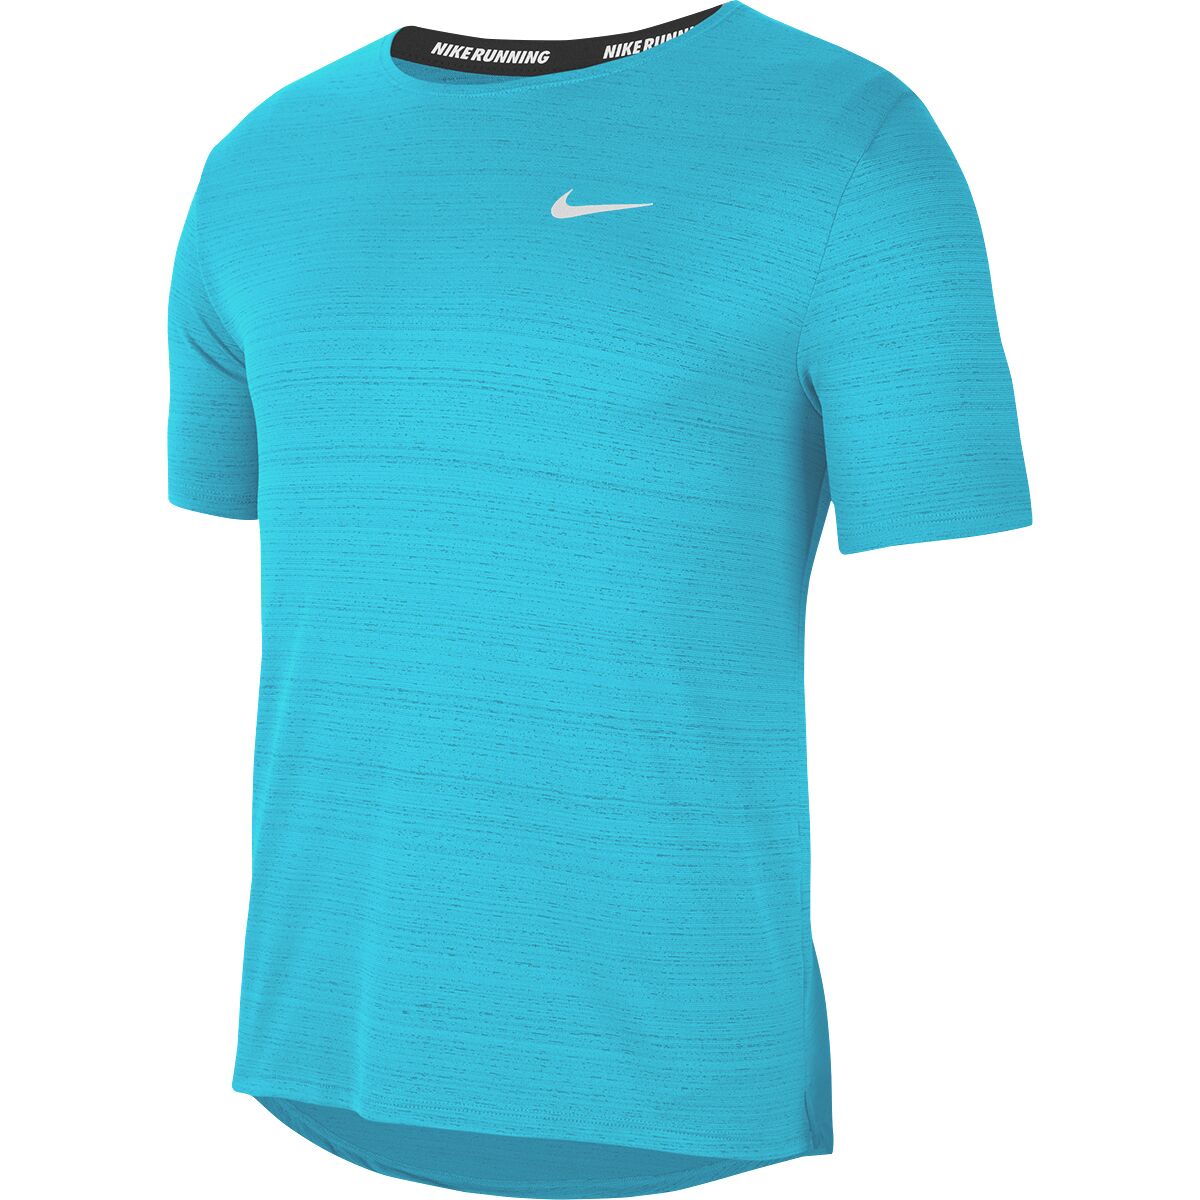 Nike Dry Miler Short-Sleeve Top - Men's - Clothing